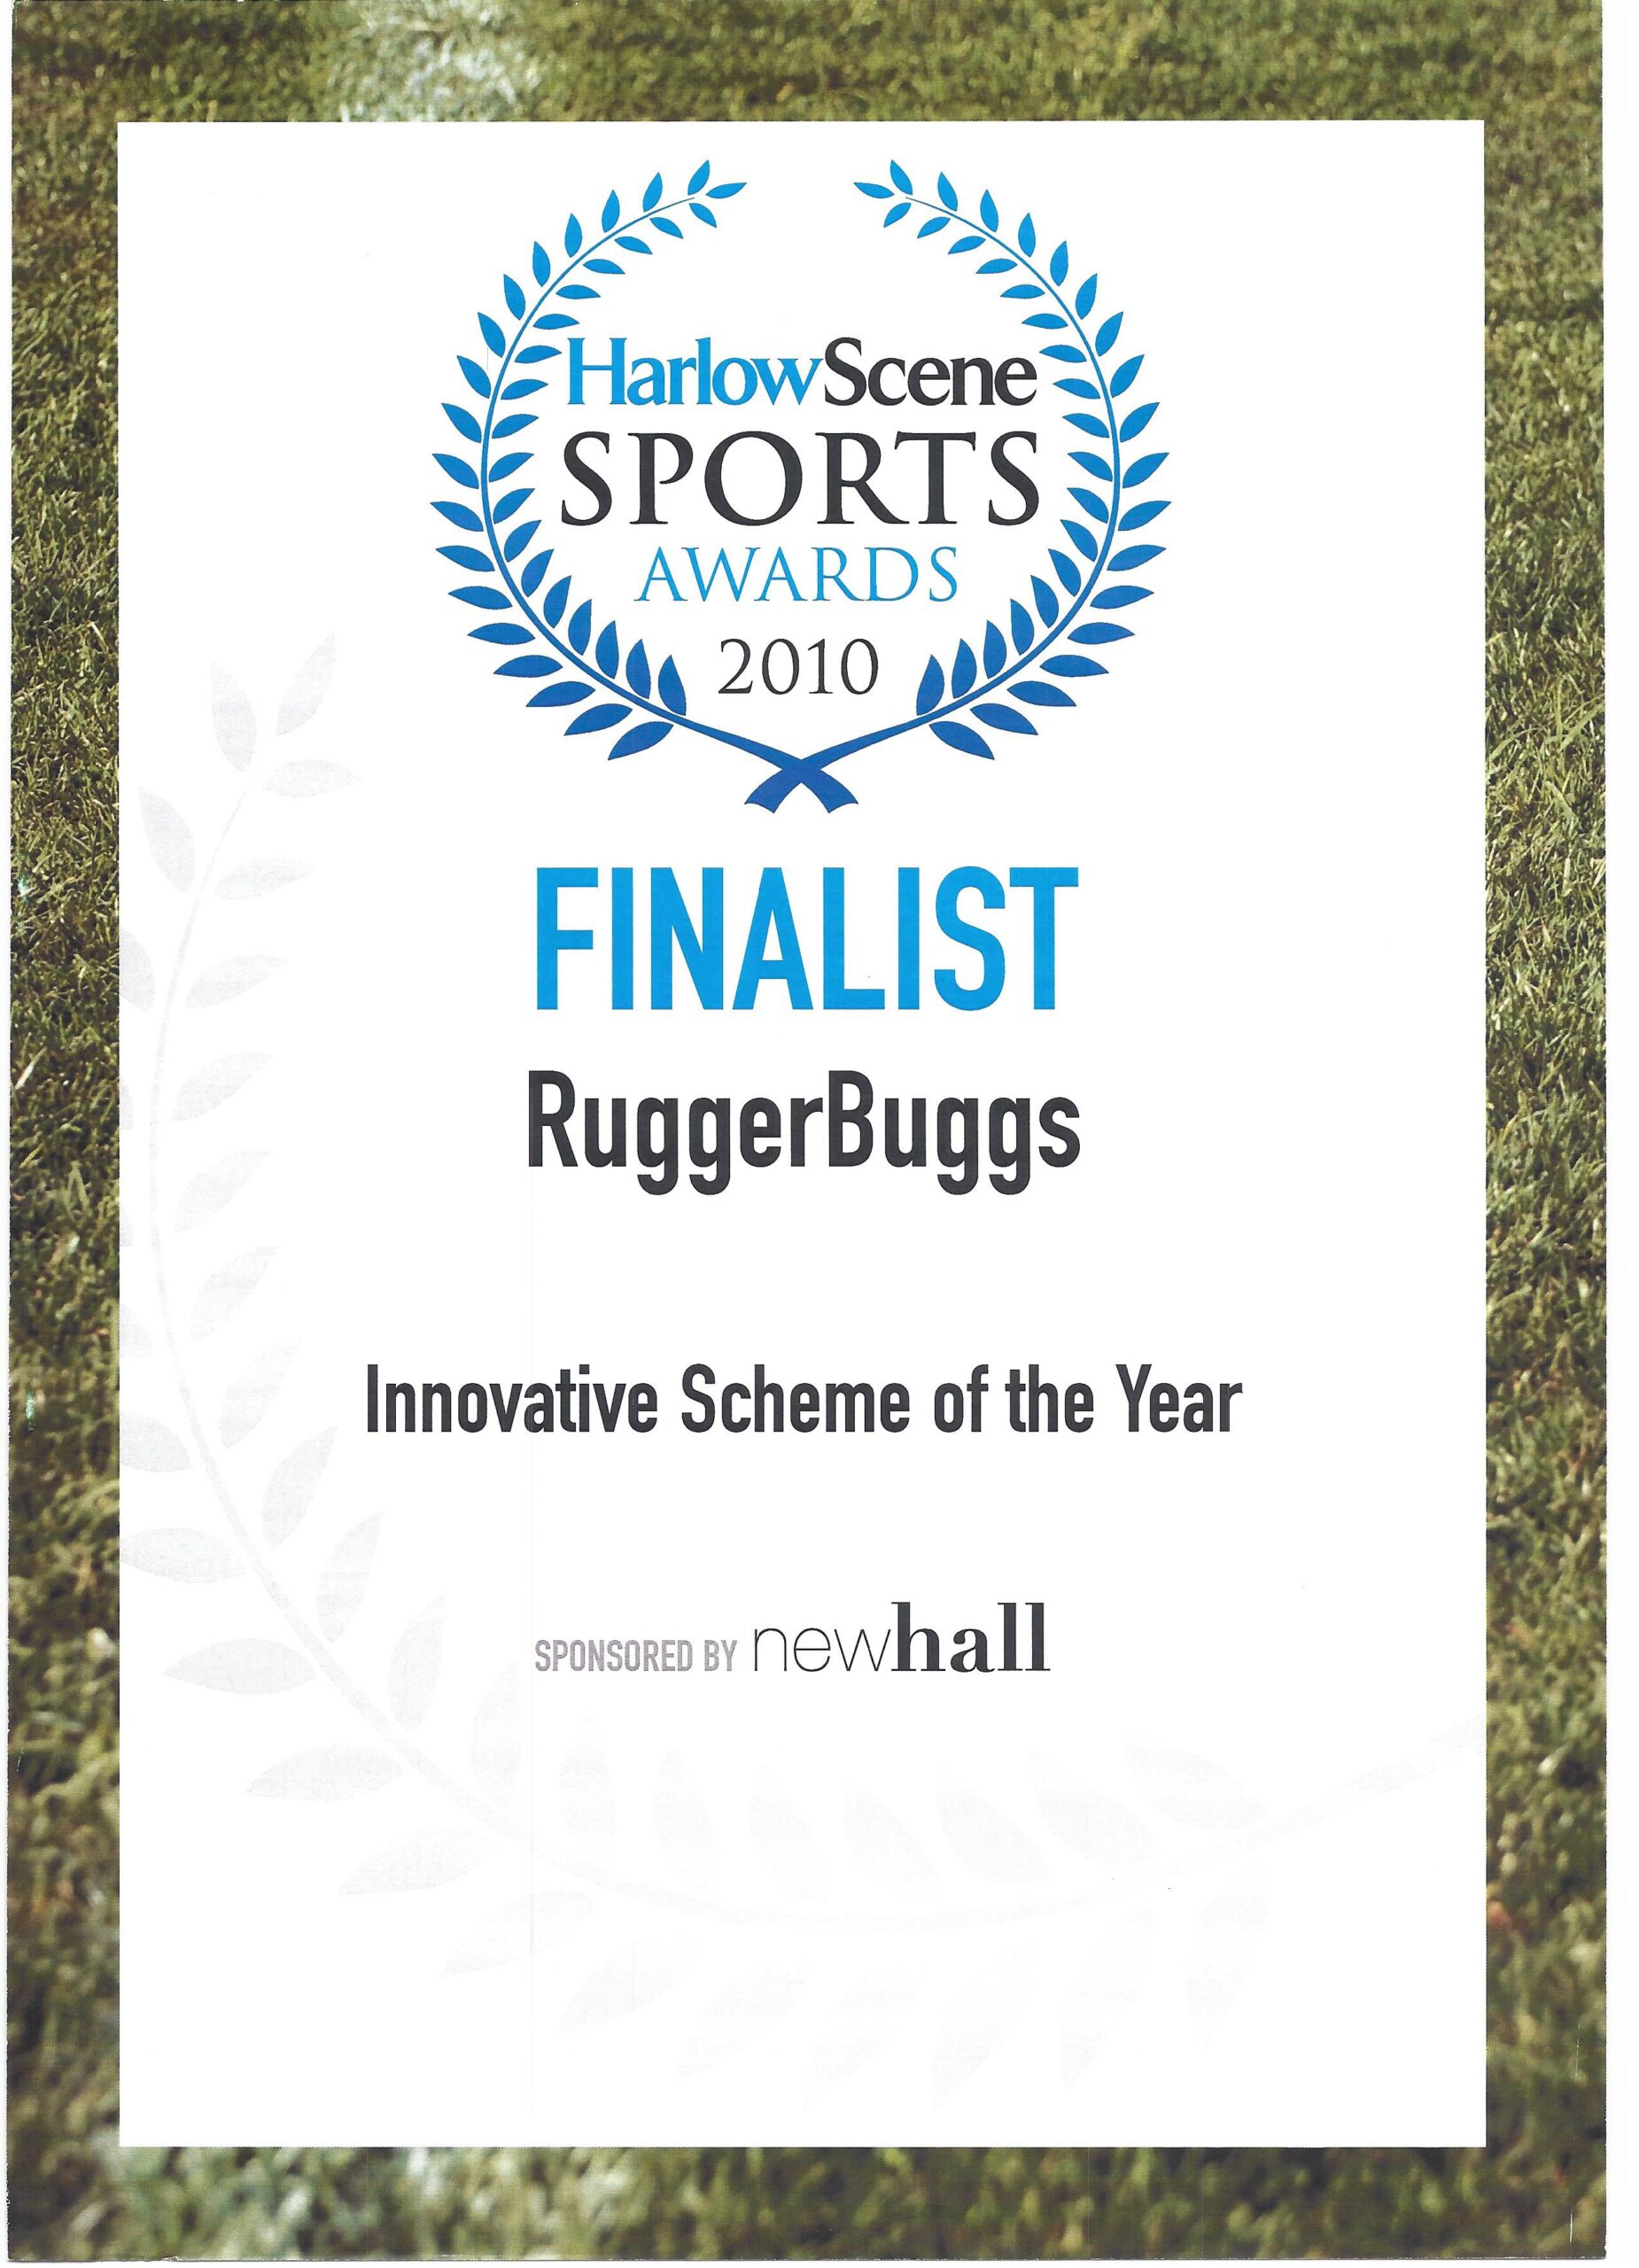 Ruggerbugs Harlow Scene Sports Awards Finalist 2010